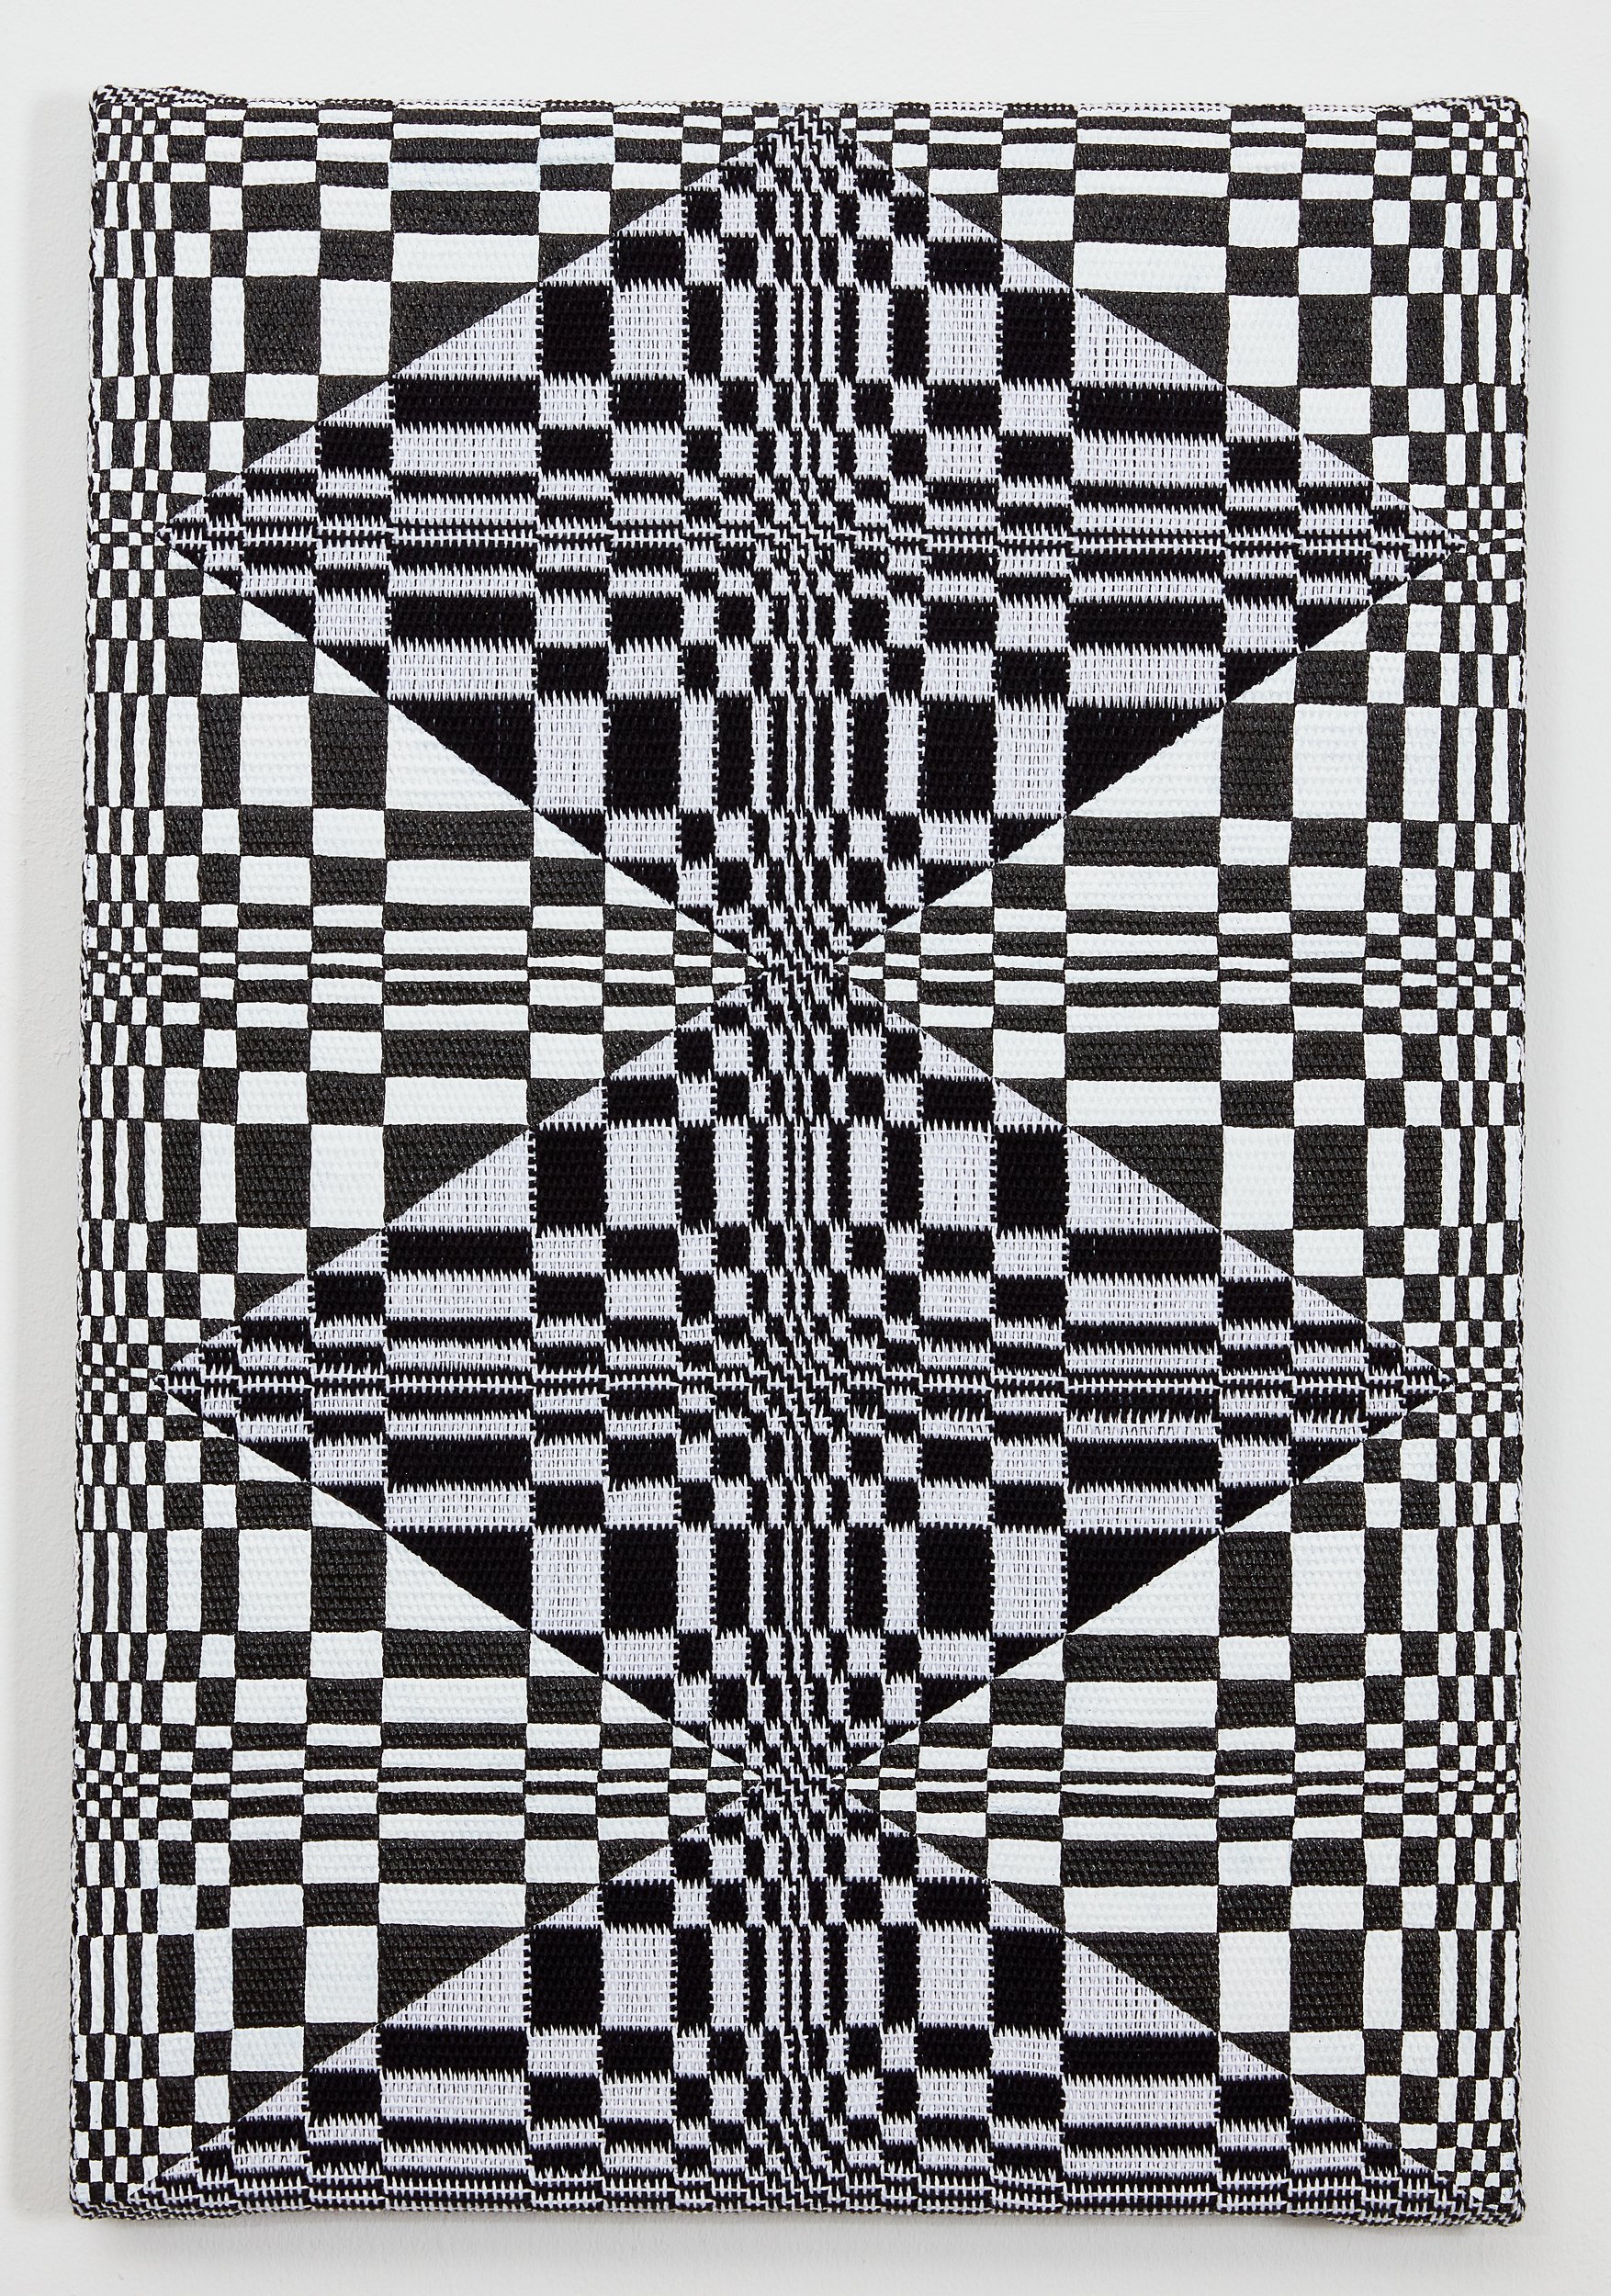 Samantha Bittman, Untitled, 2020, acrylic on hand-woven textile, 19 x 15 in, 48.3 x 38.1 cm, (SBi302532) LR